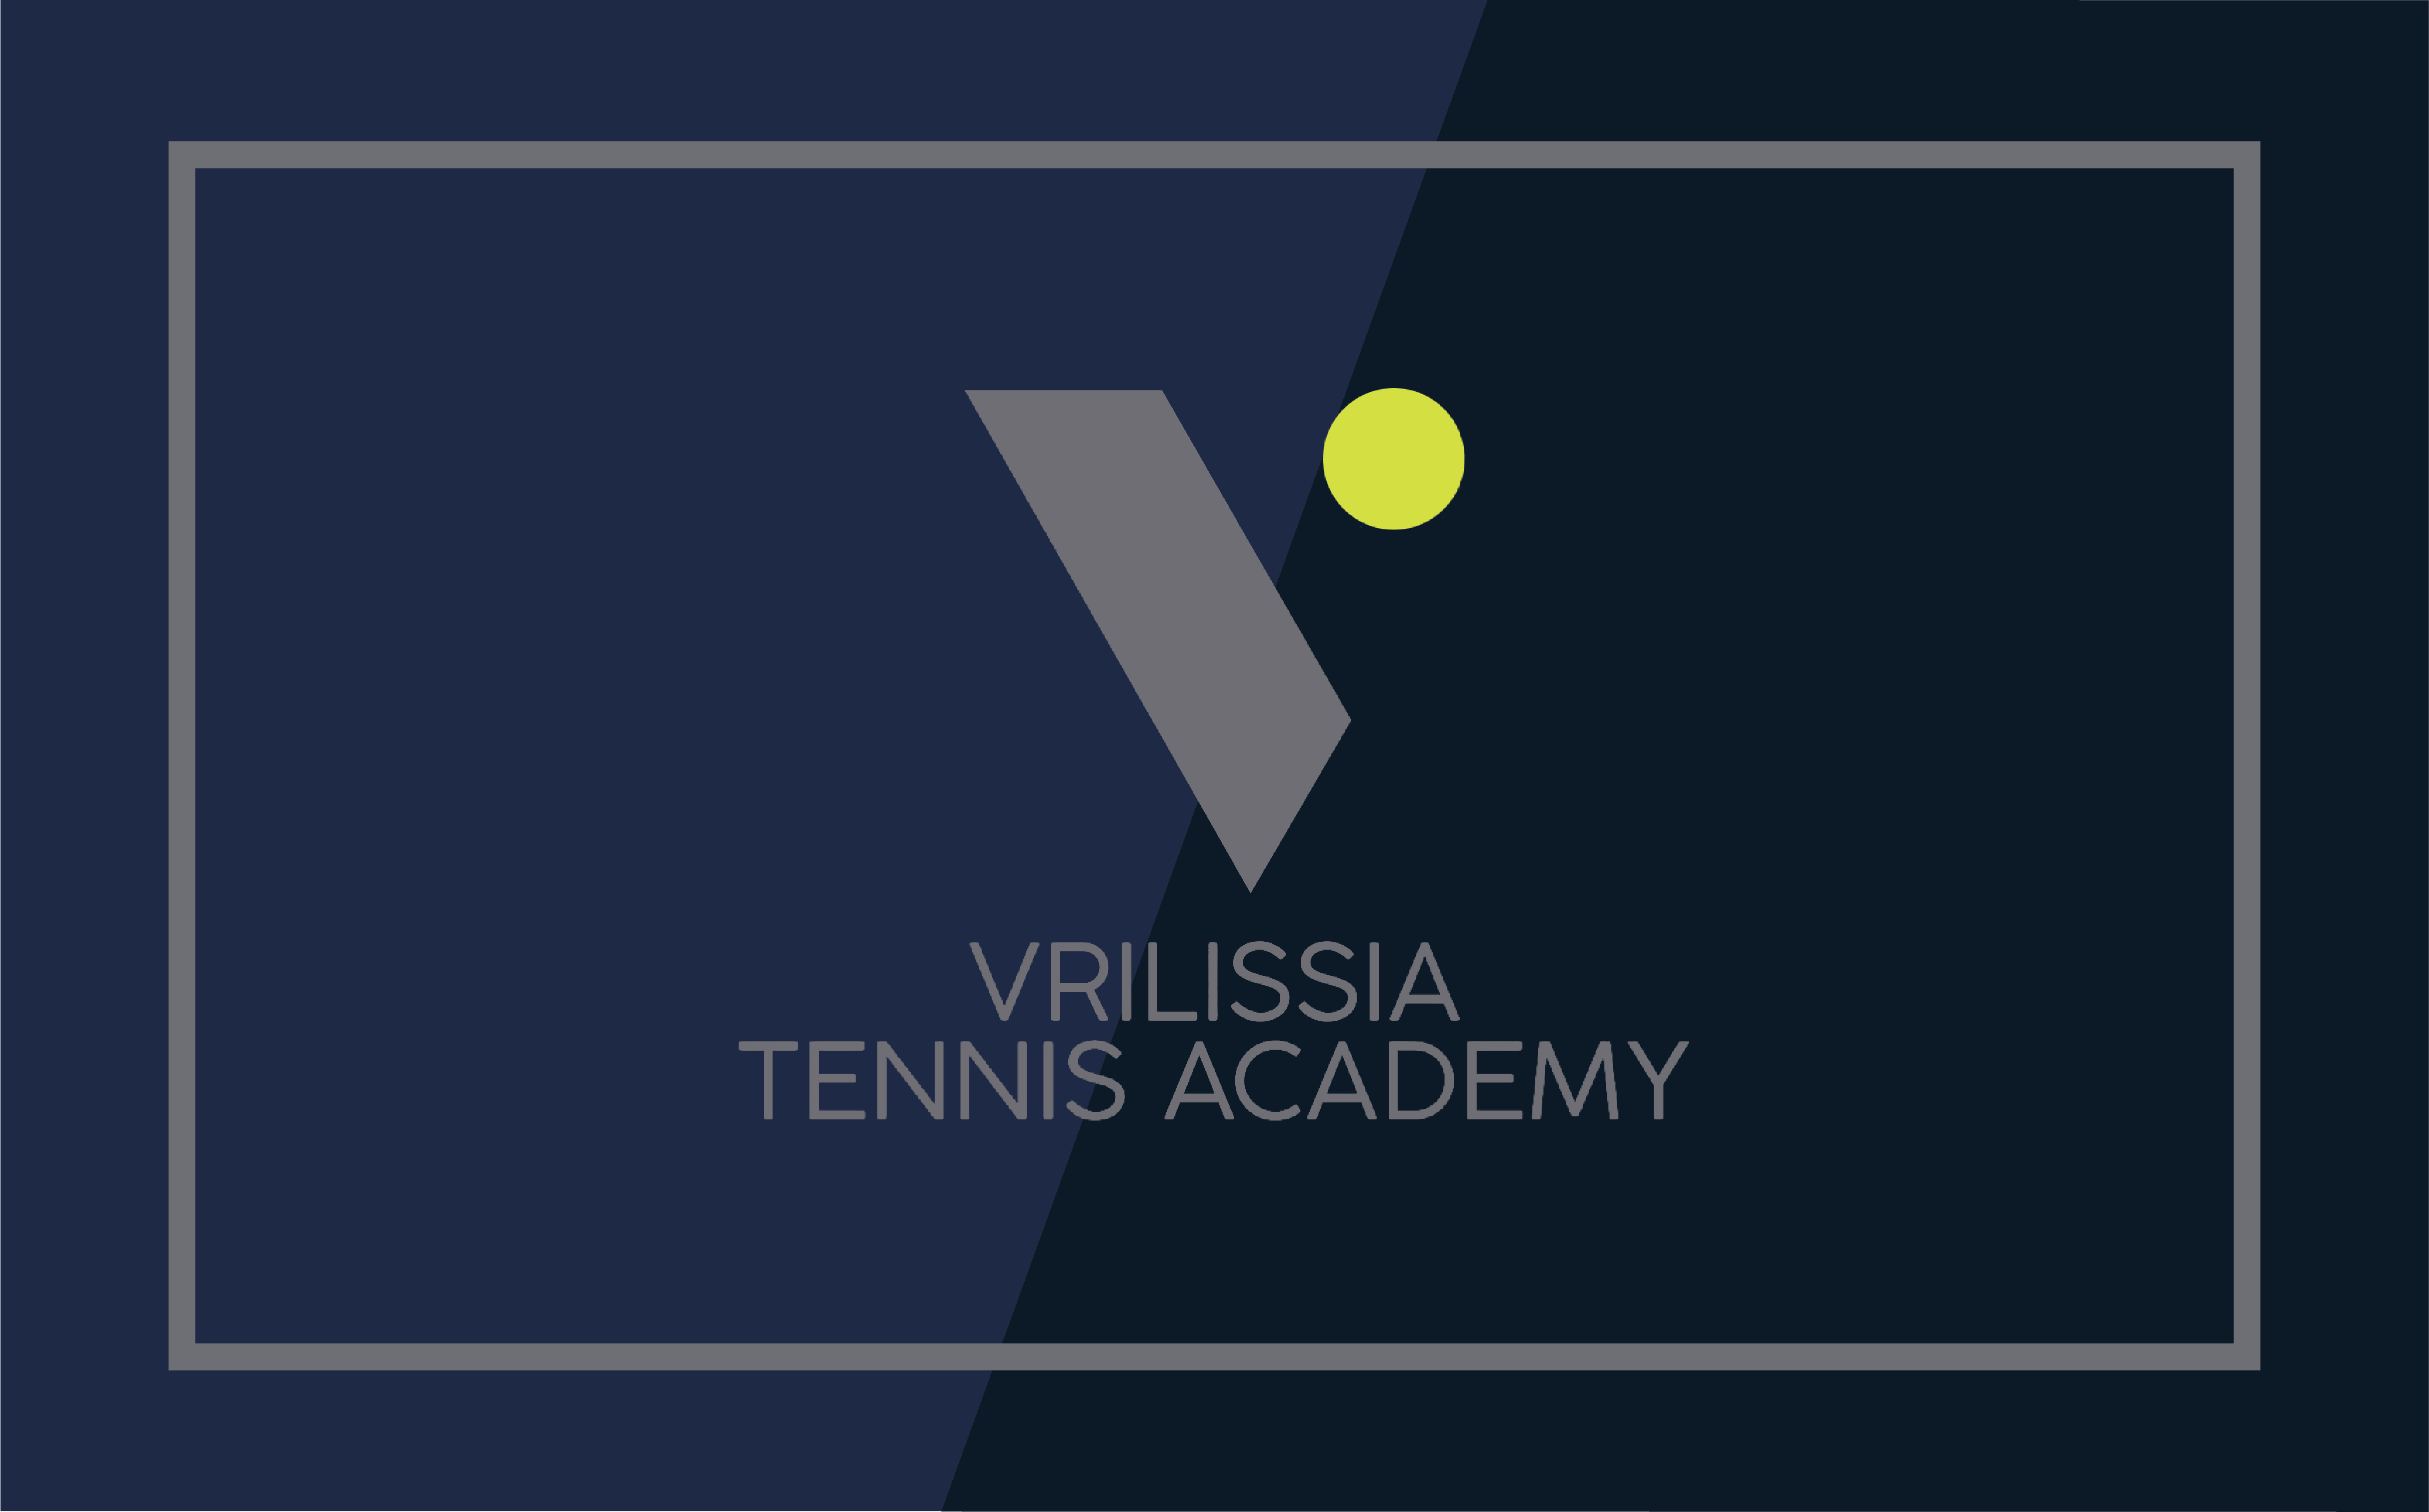 Vrilissia Tennis Academy